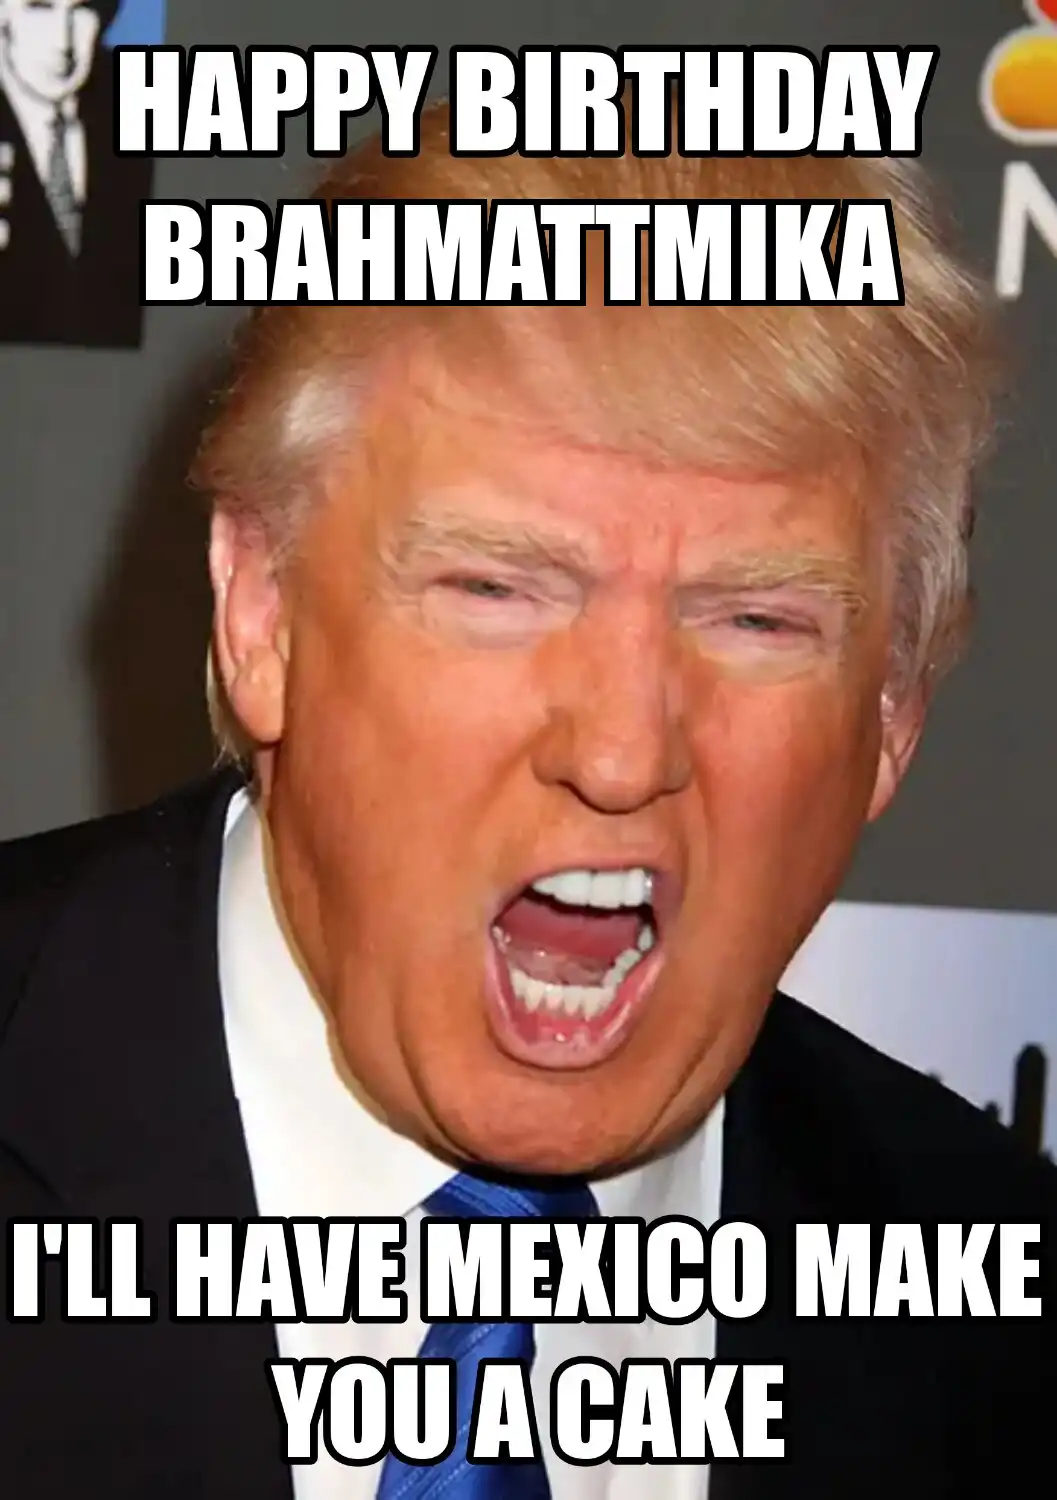 Happy Birthday Brahmattmika Mexico Make You A Cake Meme